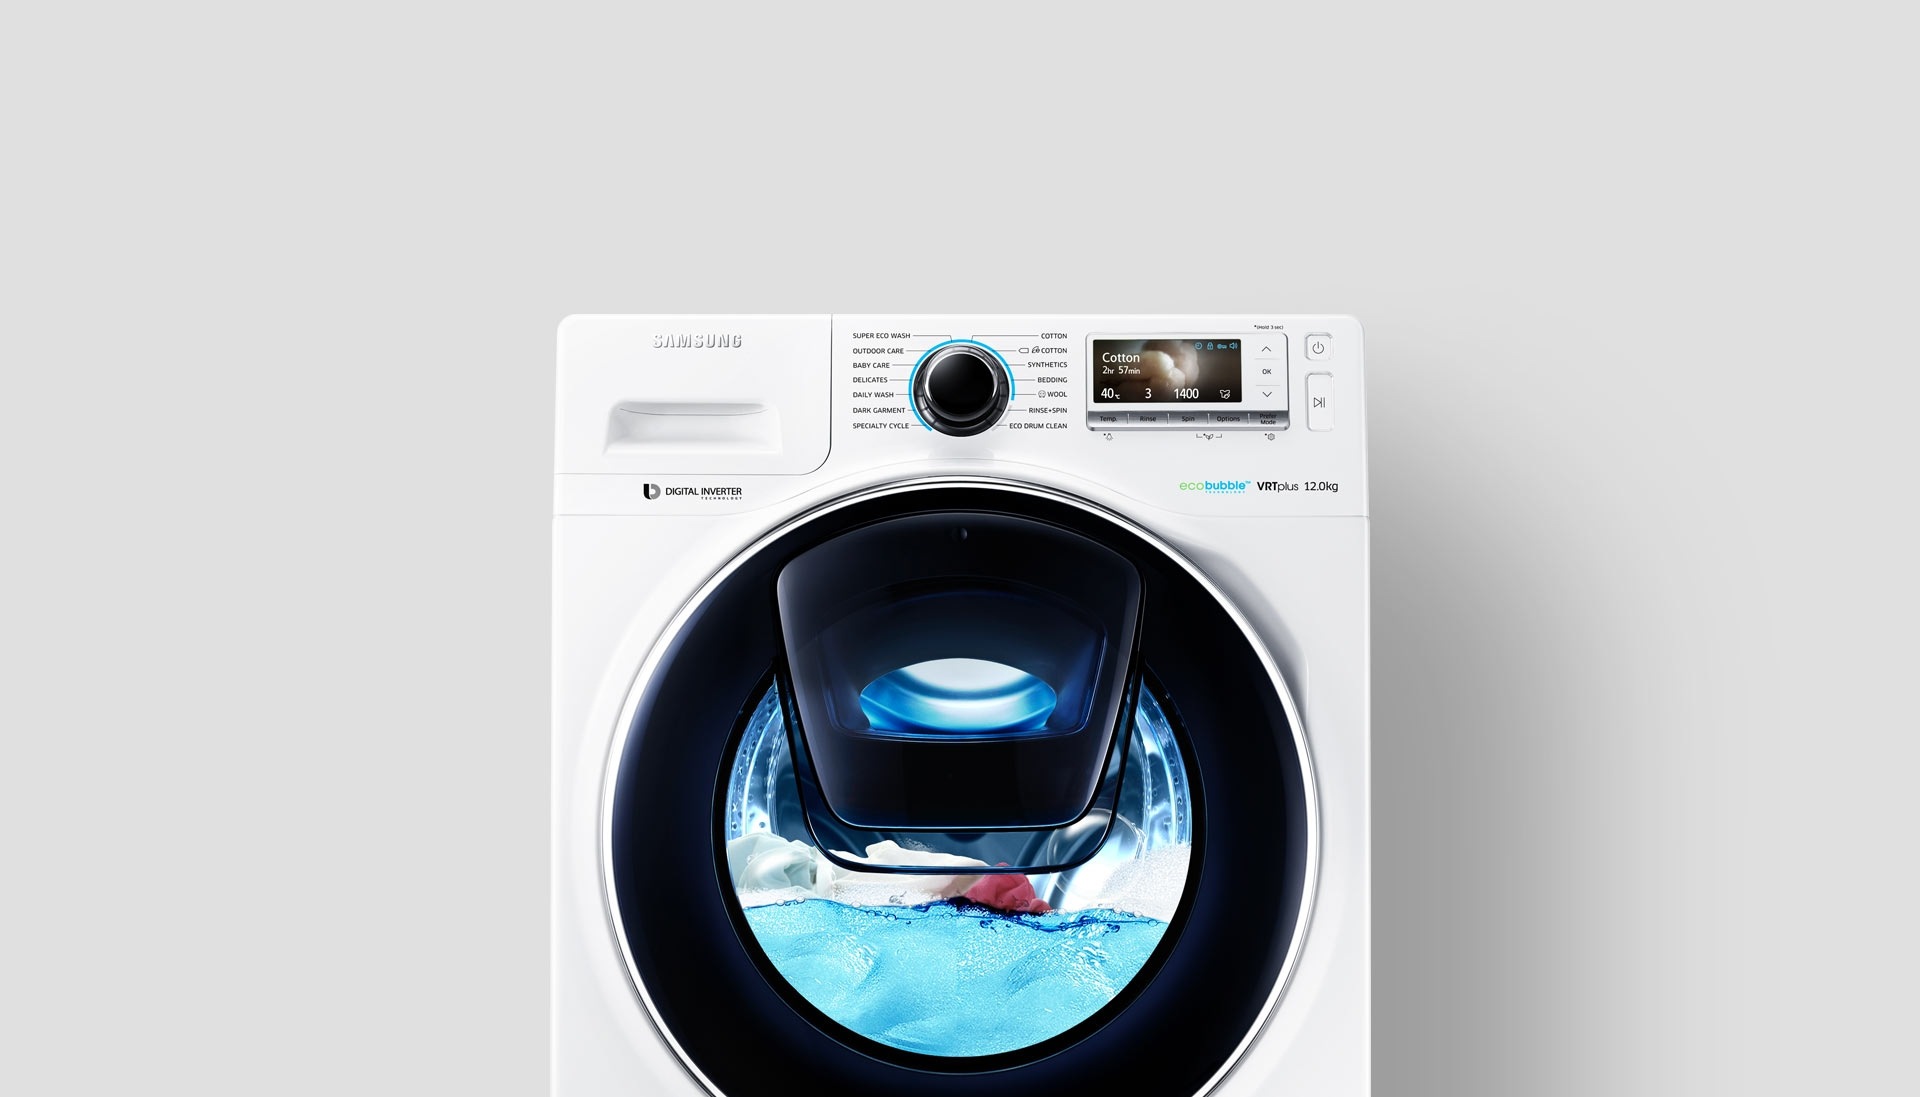 Стиральная машина Samsung ww12k8412ow. Стиральная машина Samsung s808b. Ww12k8412ow стиральная машинка. Стиральная машина Samsung Eco Bubble.